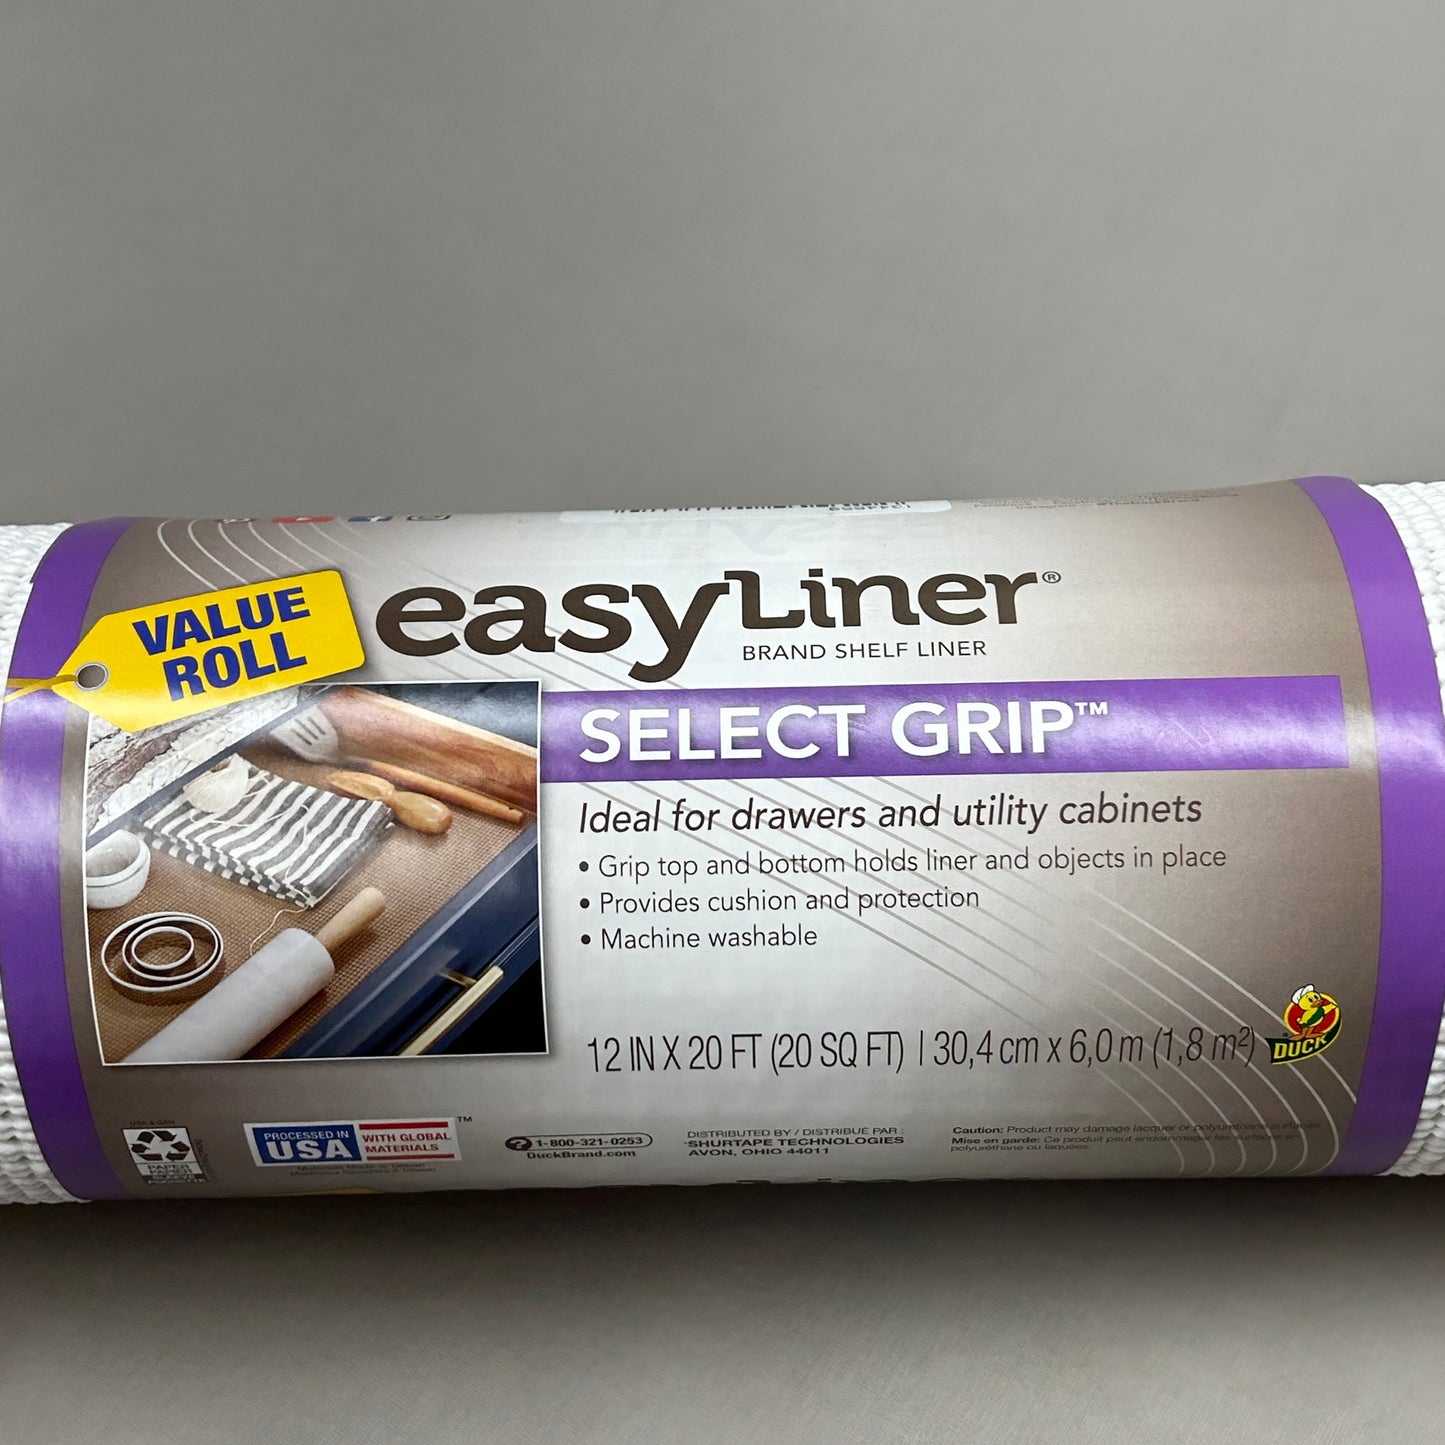 DUCK BRAND 4-PACK! Easy Liner Shelf Liner Select Grip White 12 in X 20 ft (New)